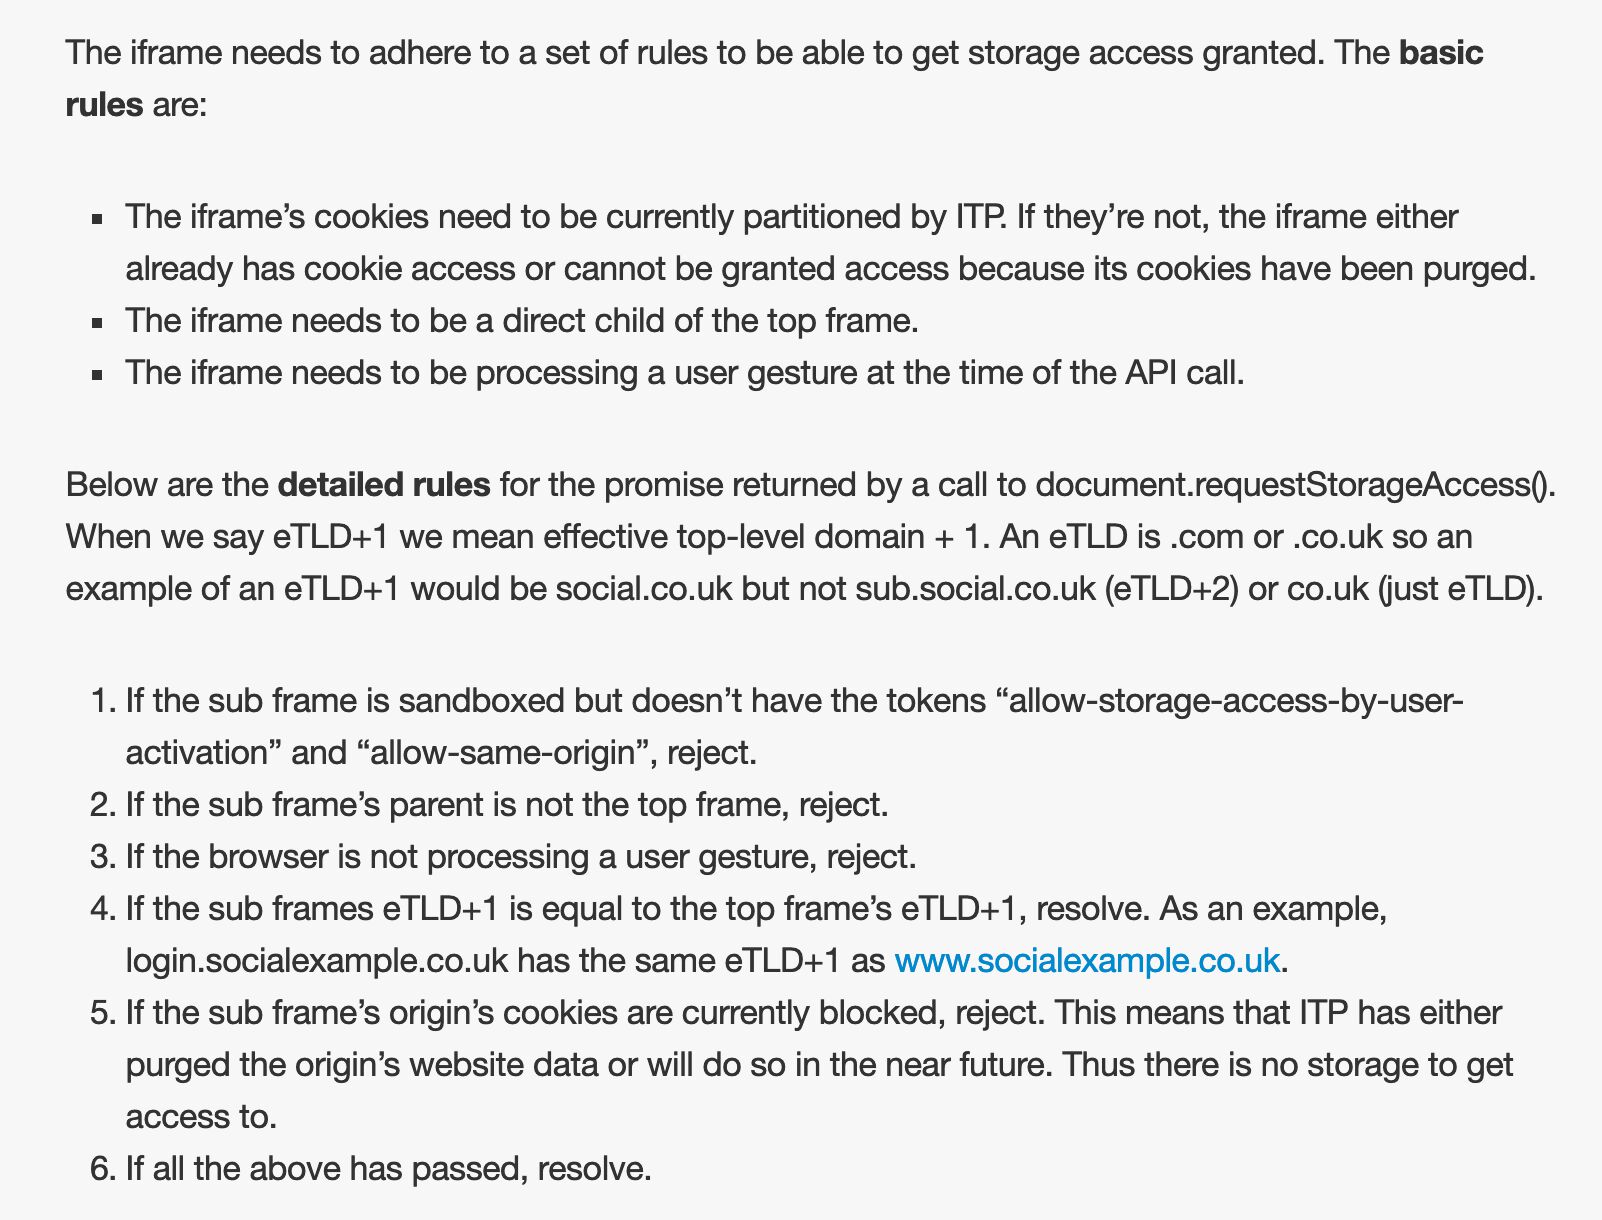 From https://webkit.org/blog/8124/introducing-storage-access-api/